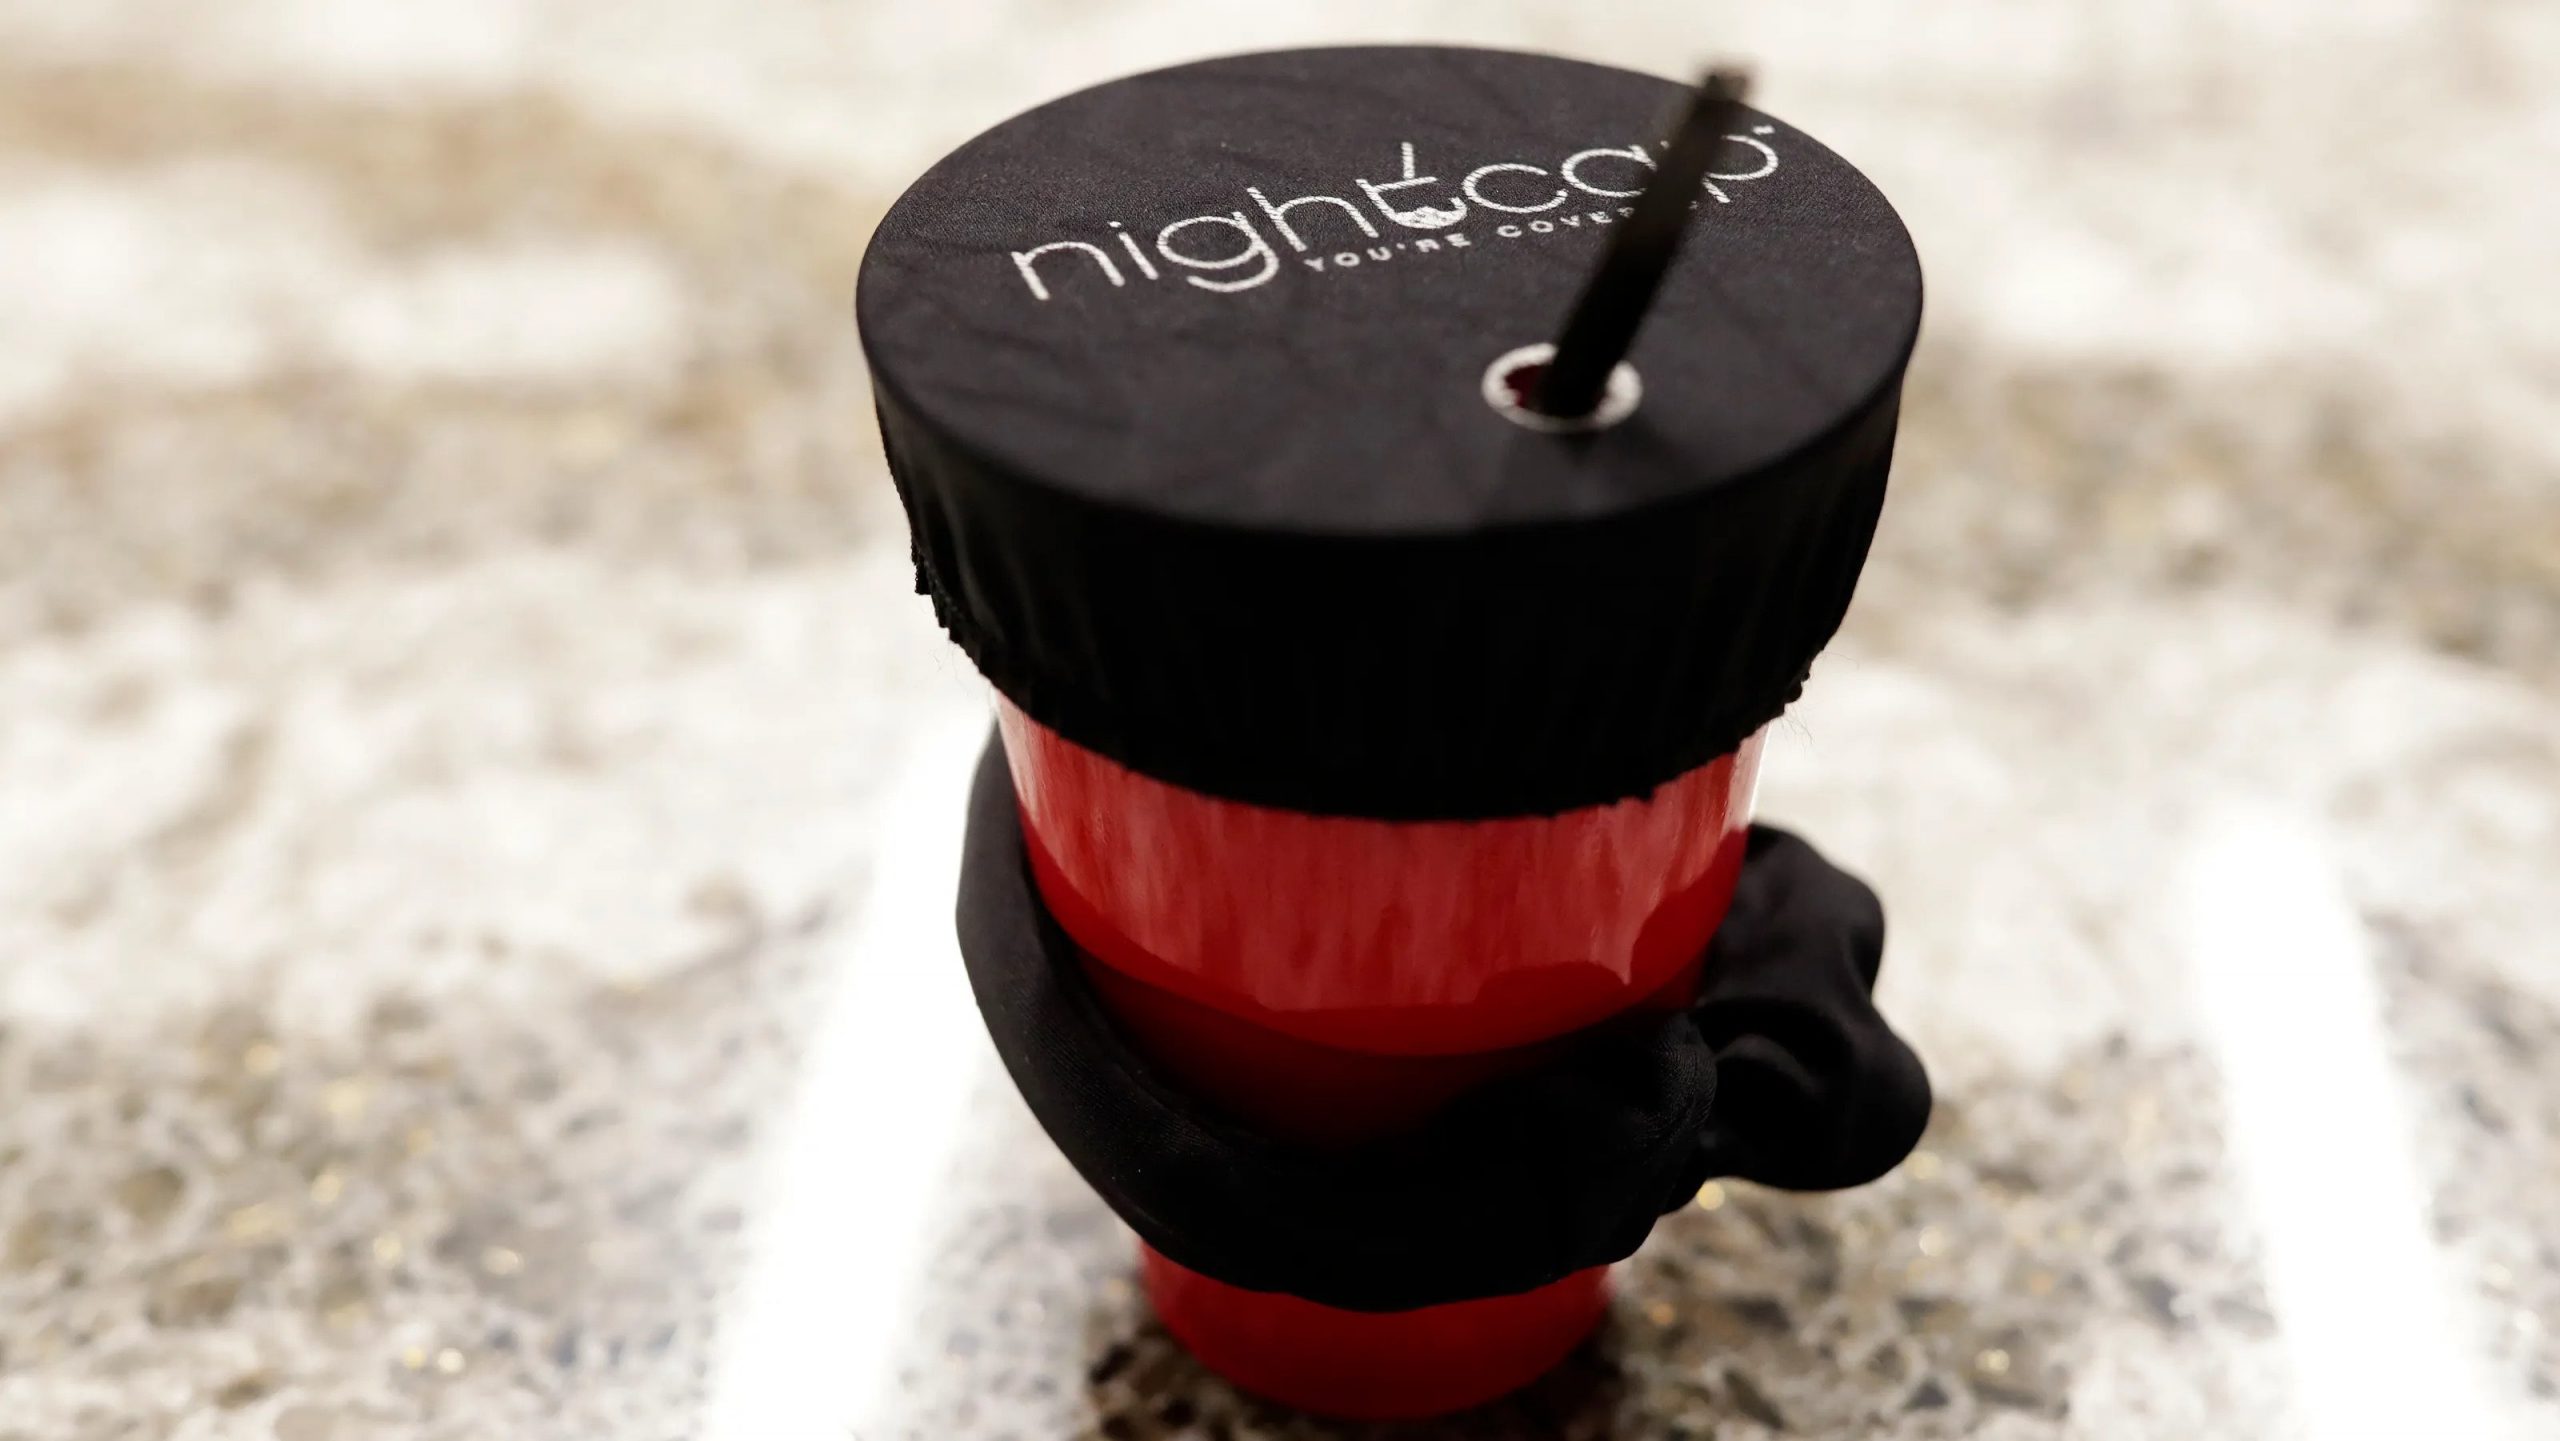 NightCap Scrunchie for safe night of drinking